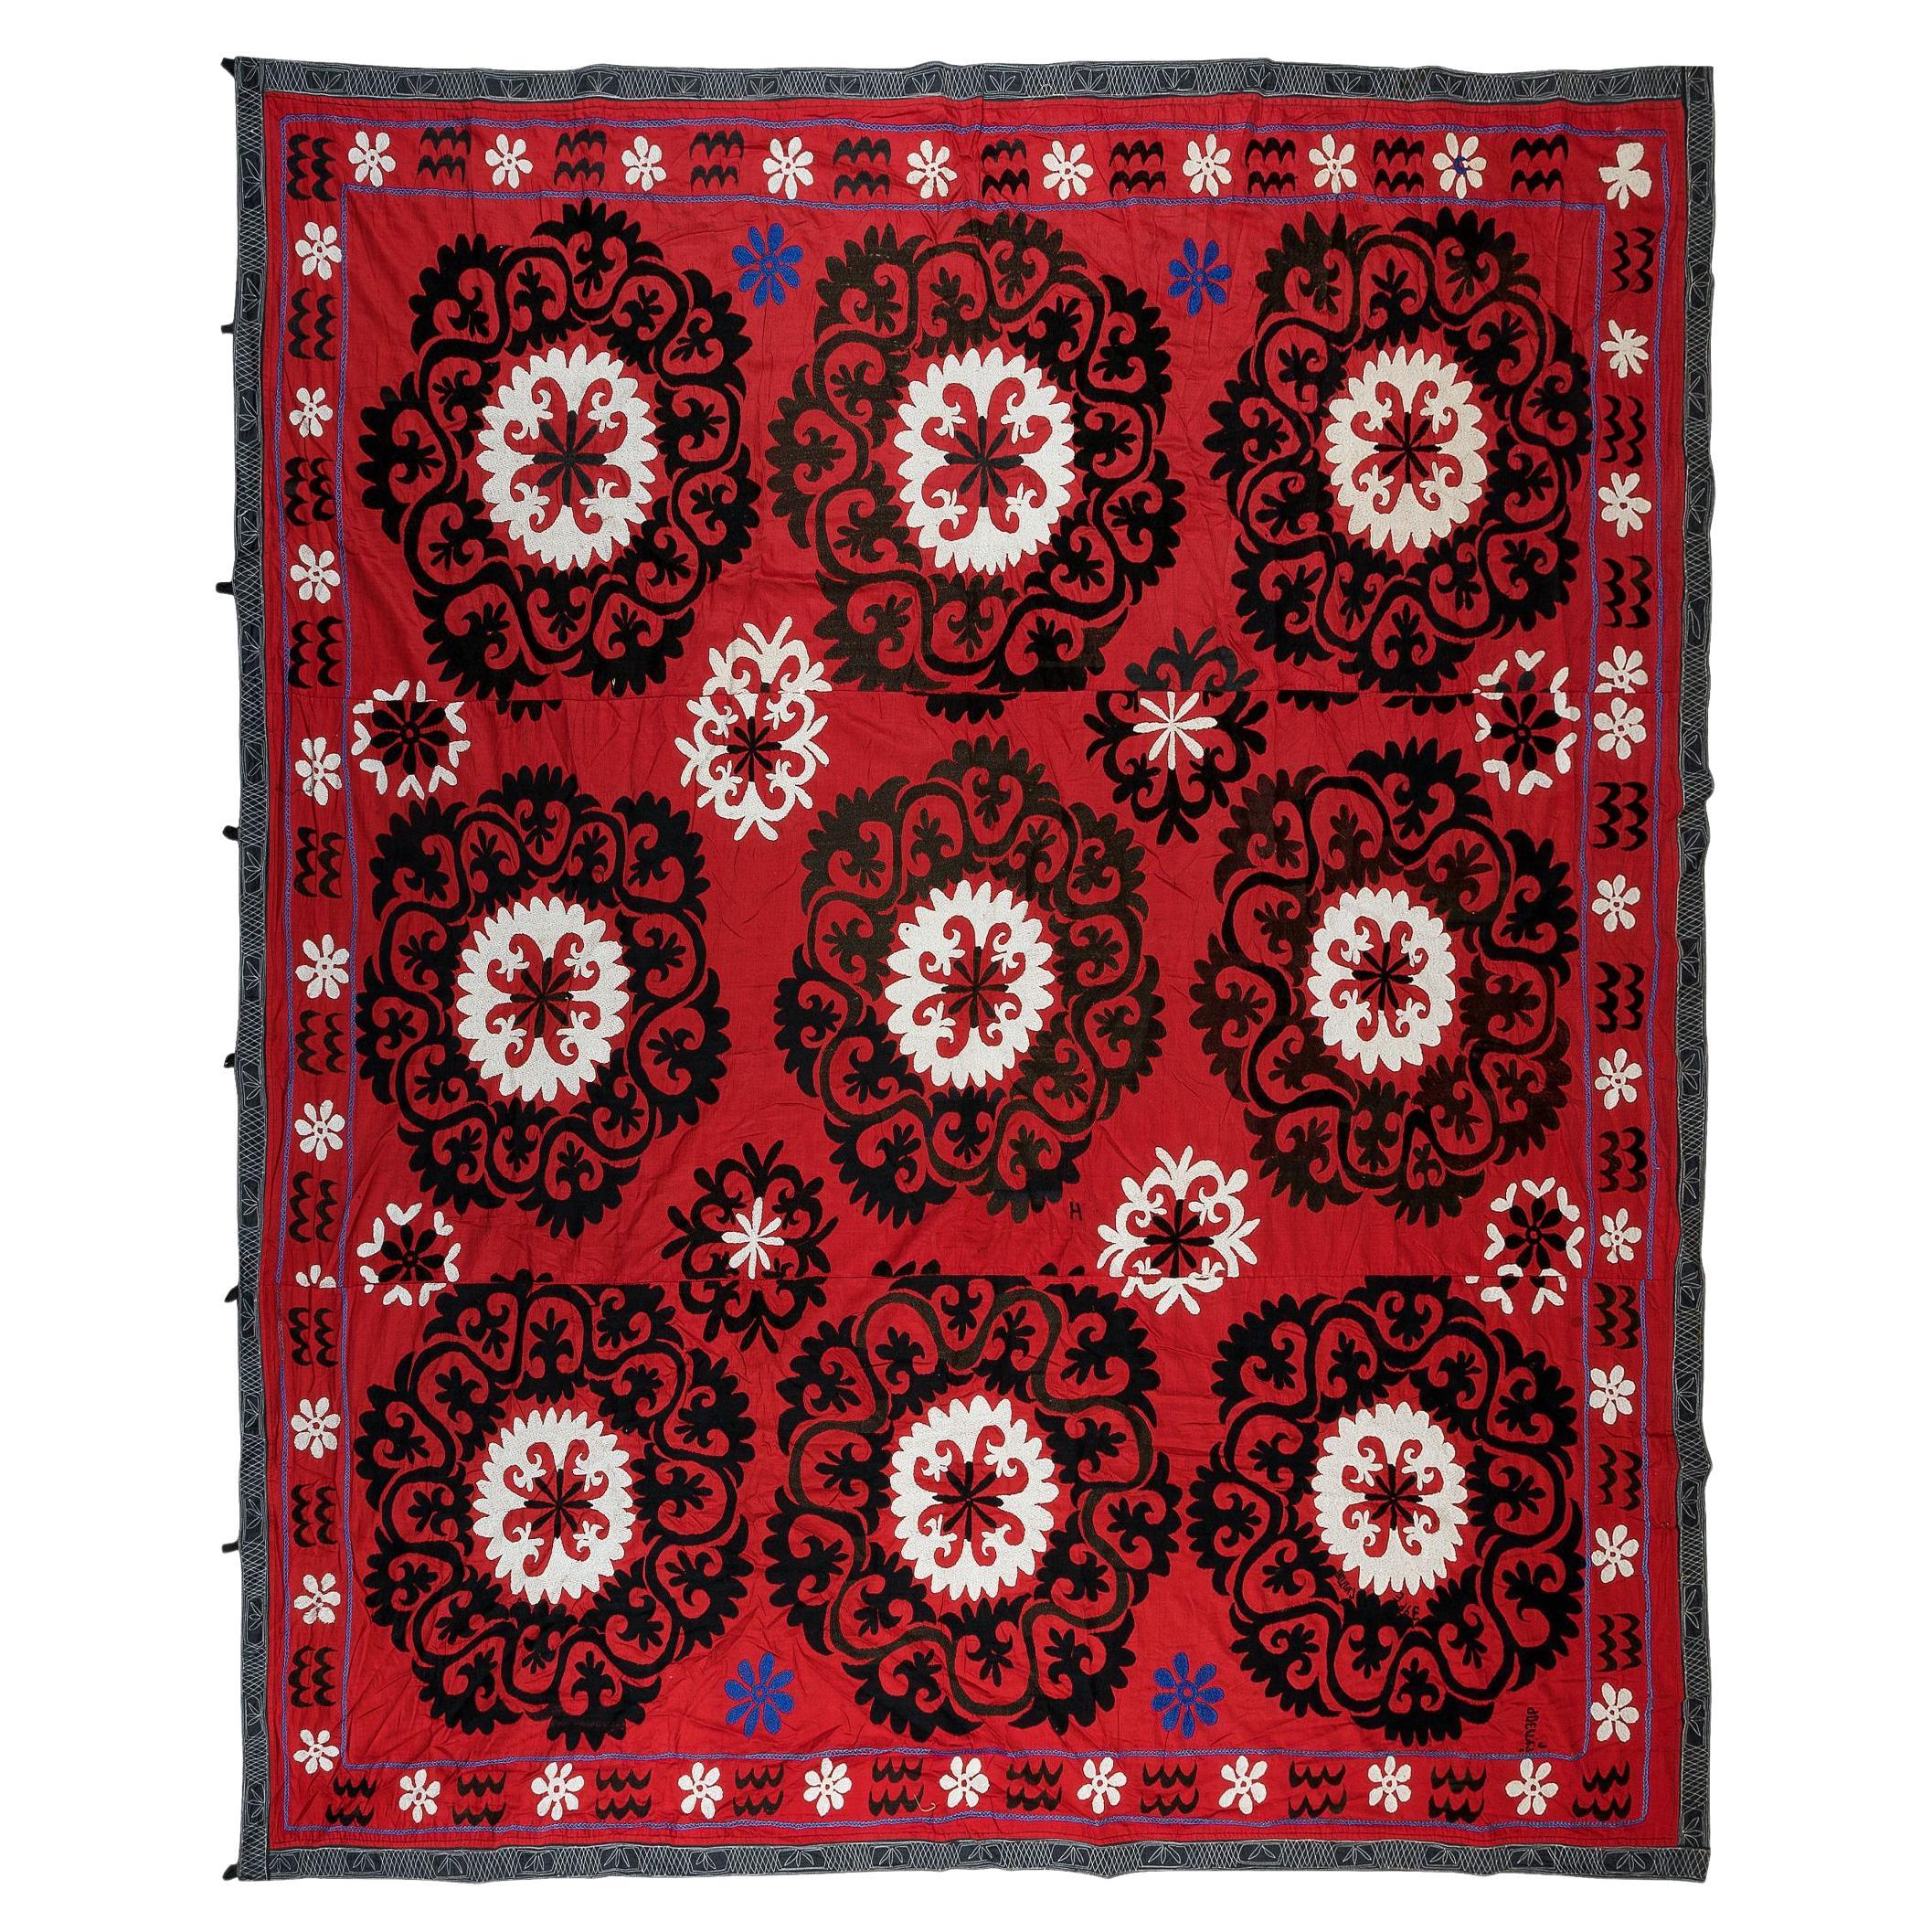 7.3x7.4 Ft Vintage-Bettbezug mit Seidenstickerei, Uzbek Suzani, Wandbehang in Rot